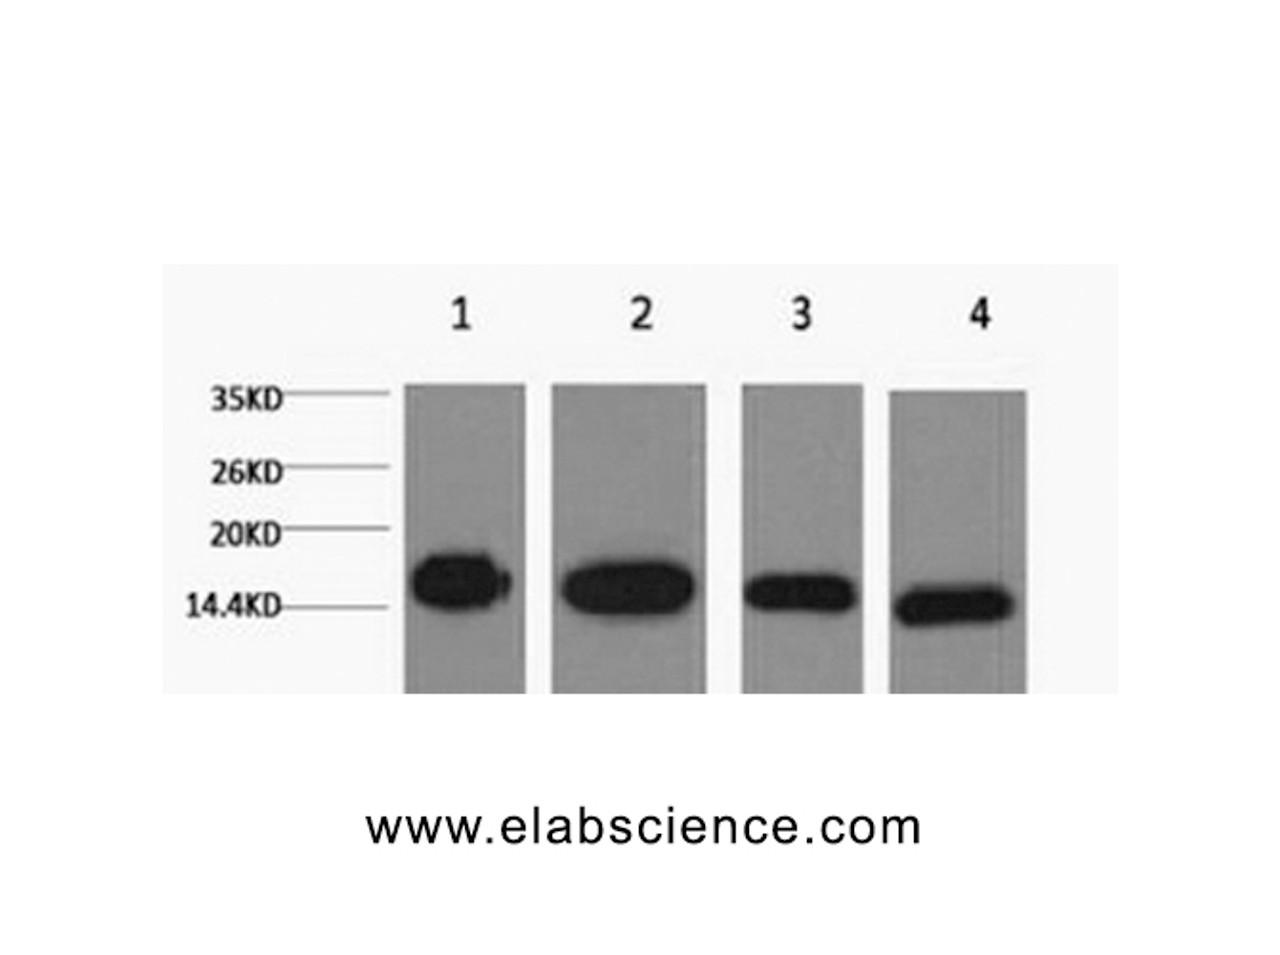 Western Blot analysis of 1) Hela, 2) Raw264.7, 3) Mouse brain, 4) Rat brain using Histone H3 Monoclonal Antibody at dilution of 1:5000.